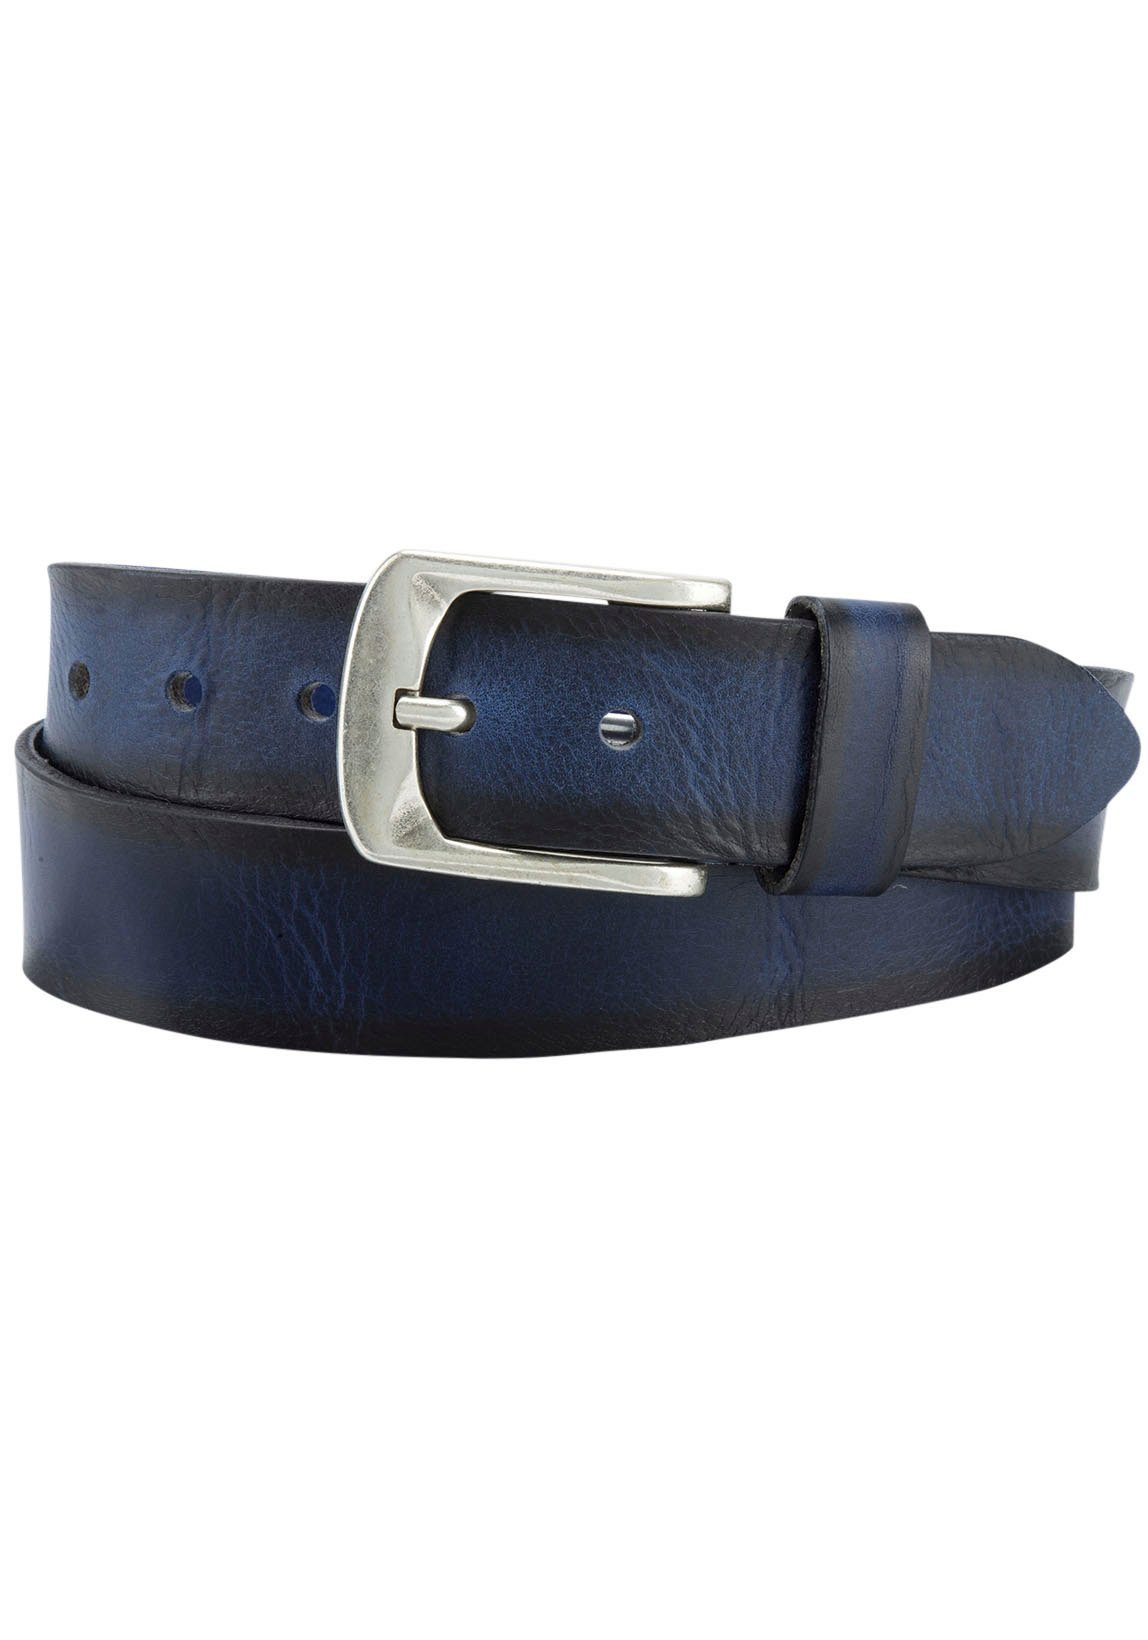 BERND GÖTZ Ledergürtel im Jeansstyle in vielen topaktuellen Farben dunkelblau